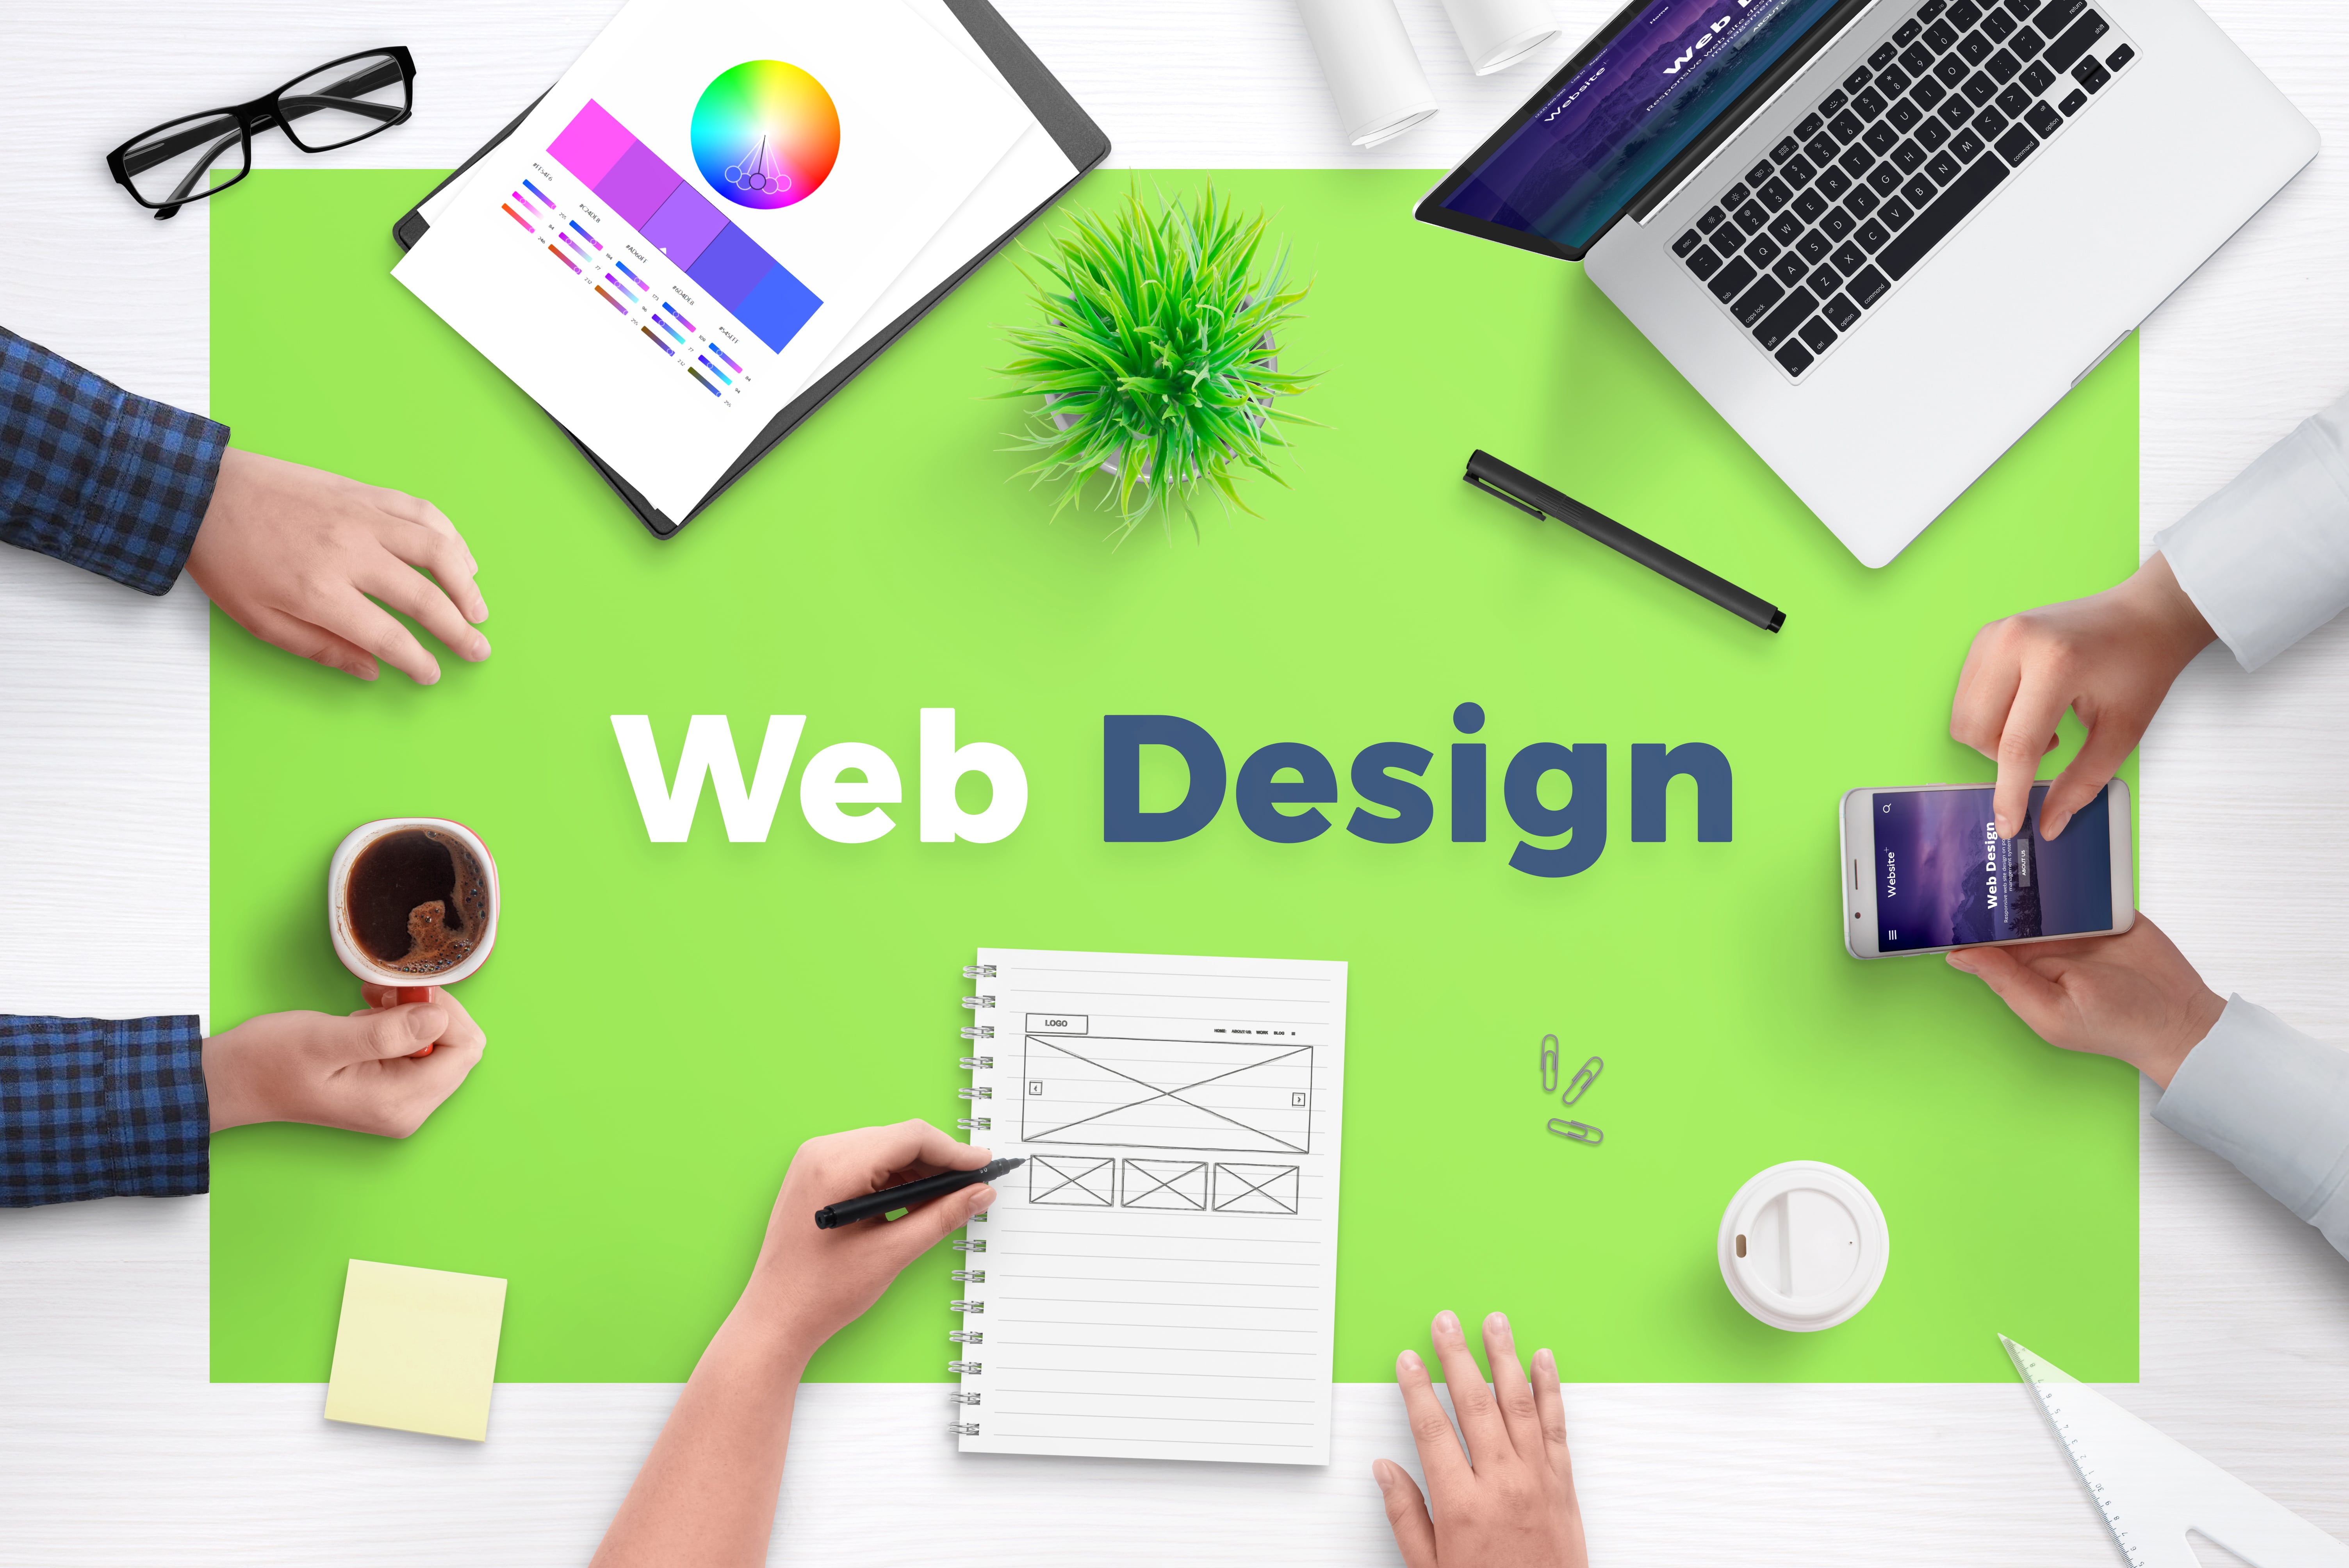 Noida's Premier Web Design Studio: Crafting Digital Excellence